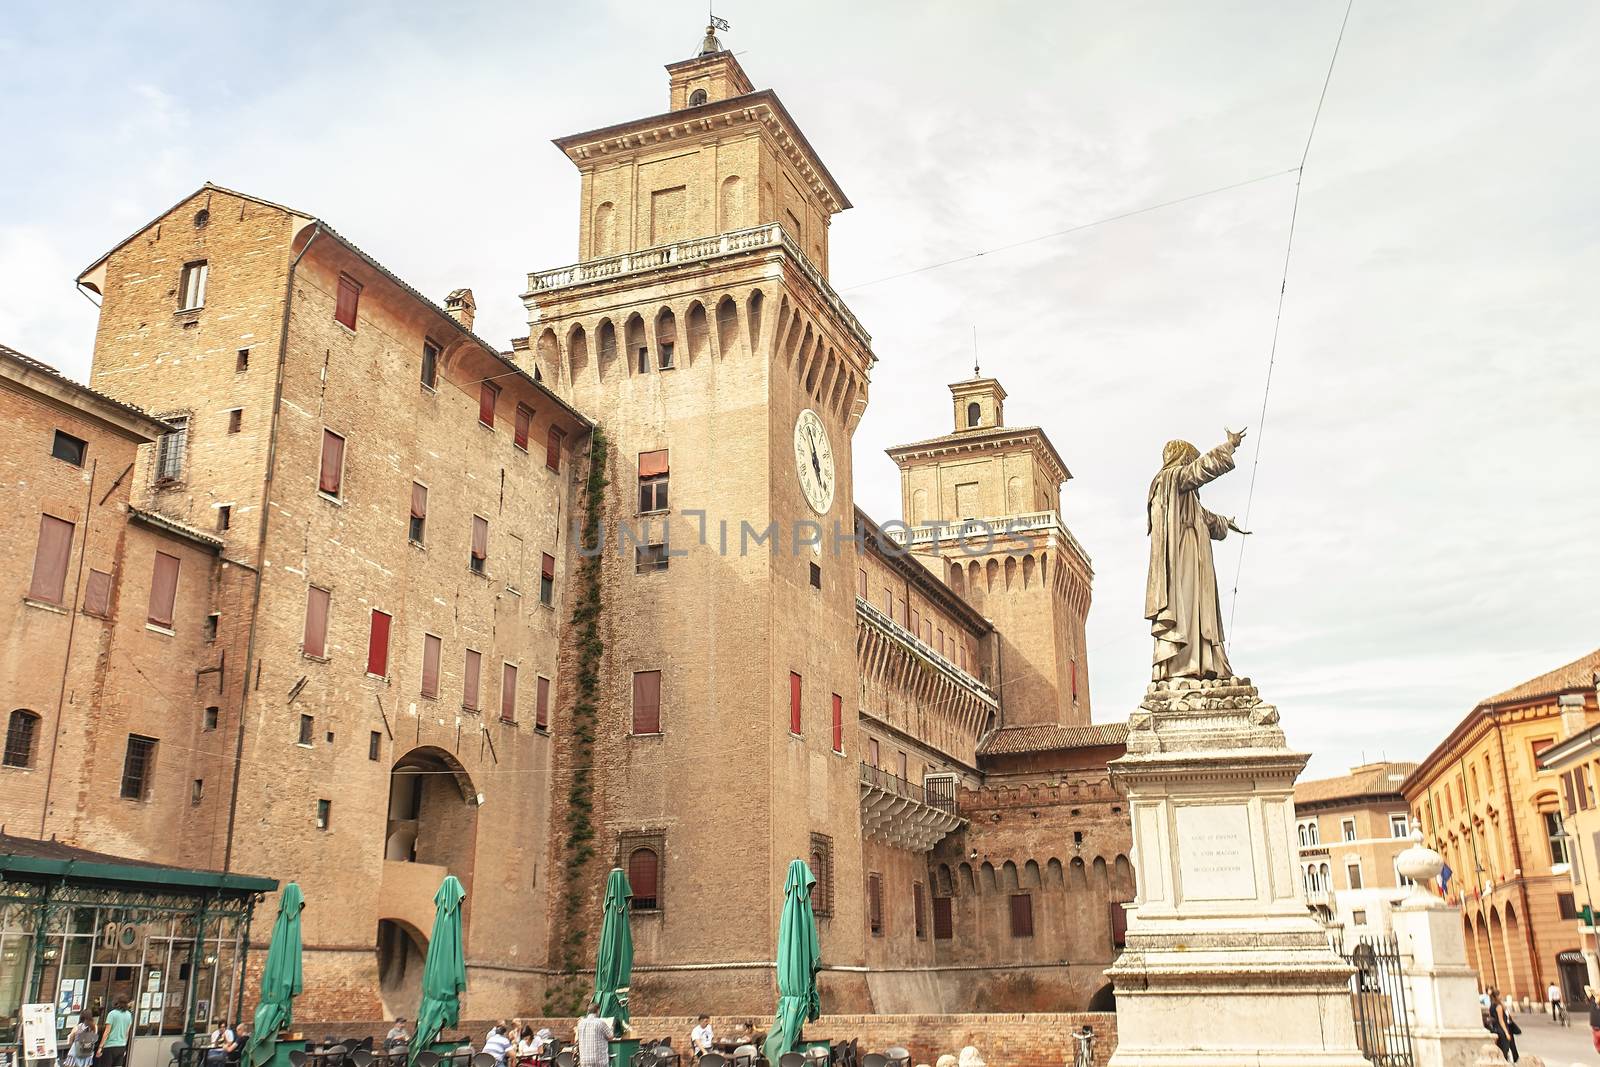 FERRARA, ITALY 29 JULY 2020 : Medieval castle of Ferrara the historical Italian city